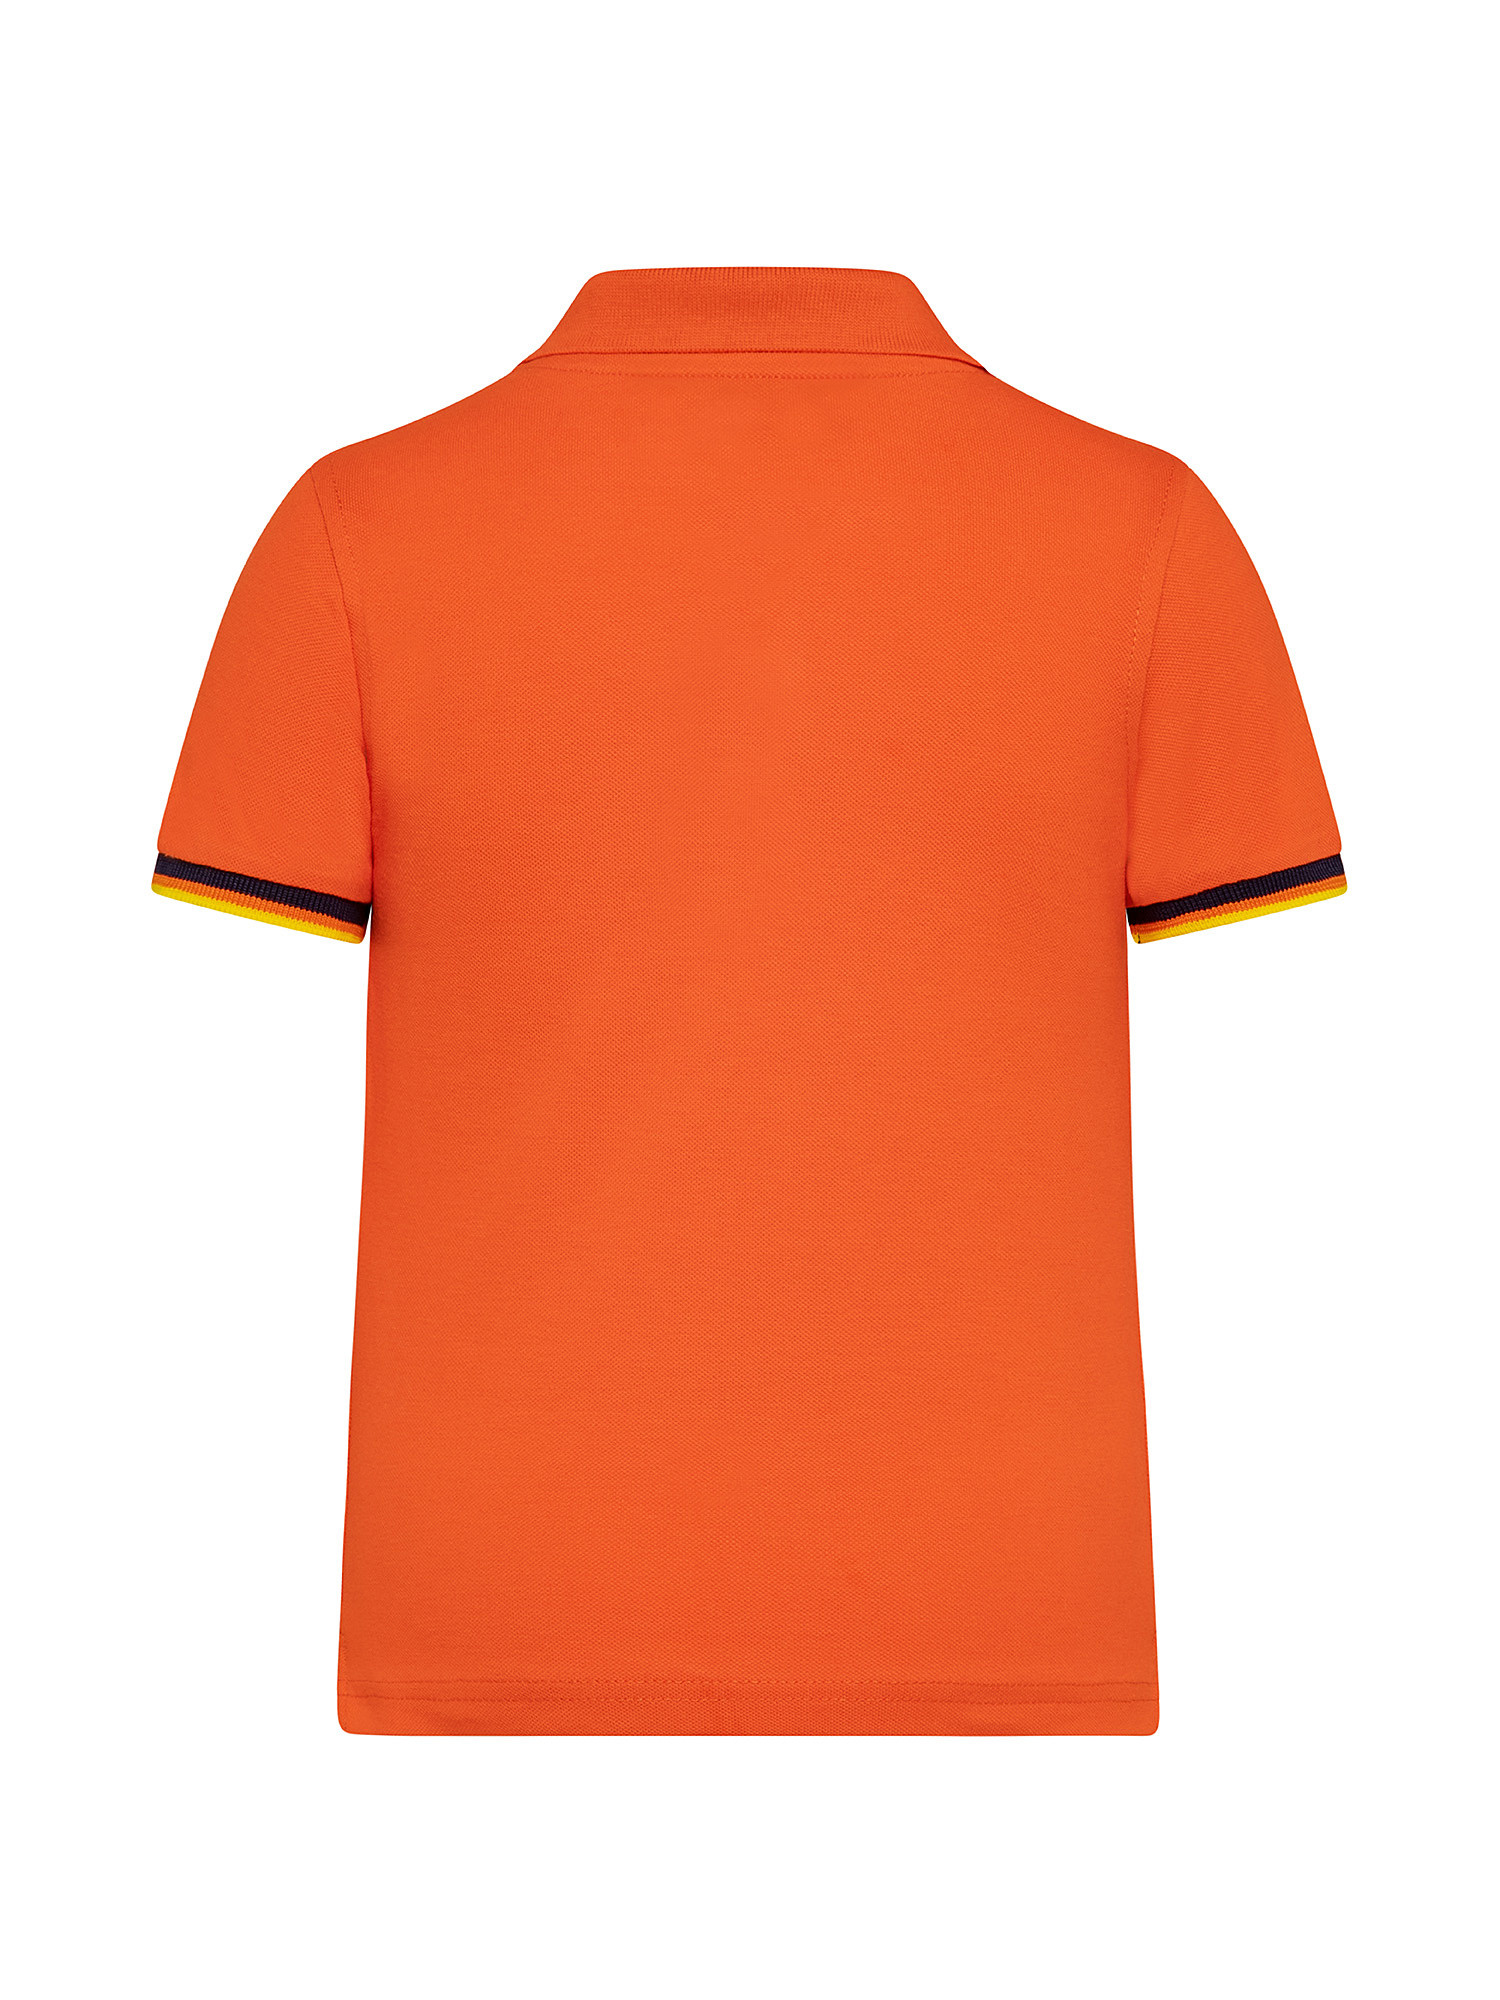 Slim fit kid's polo shirt, Orange, large image number 1